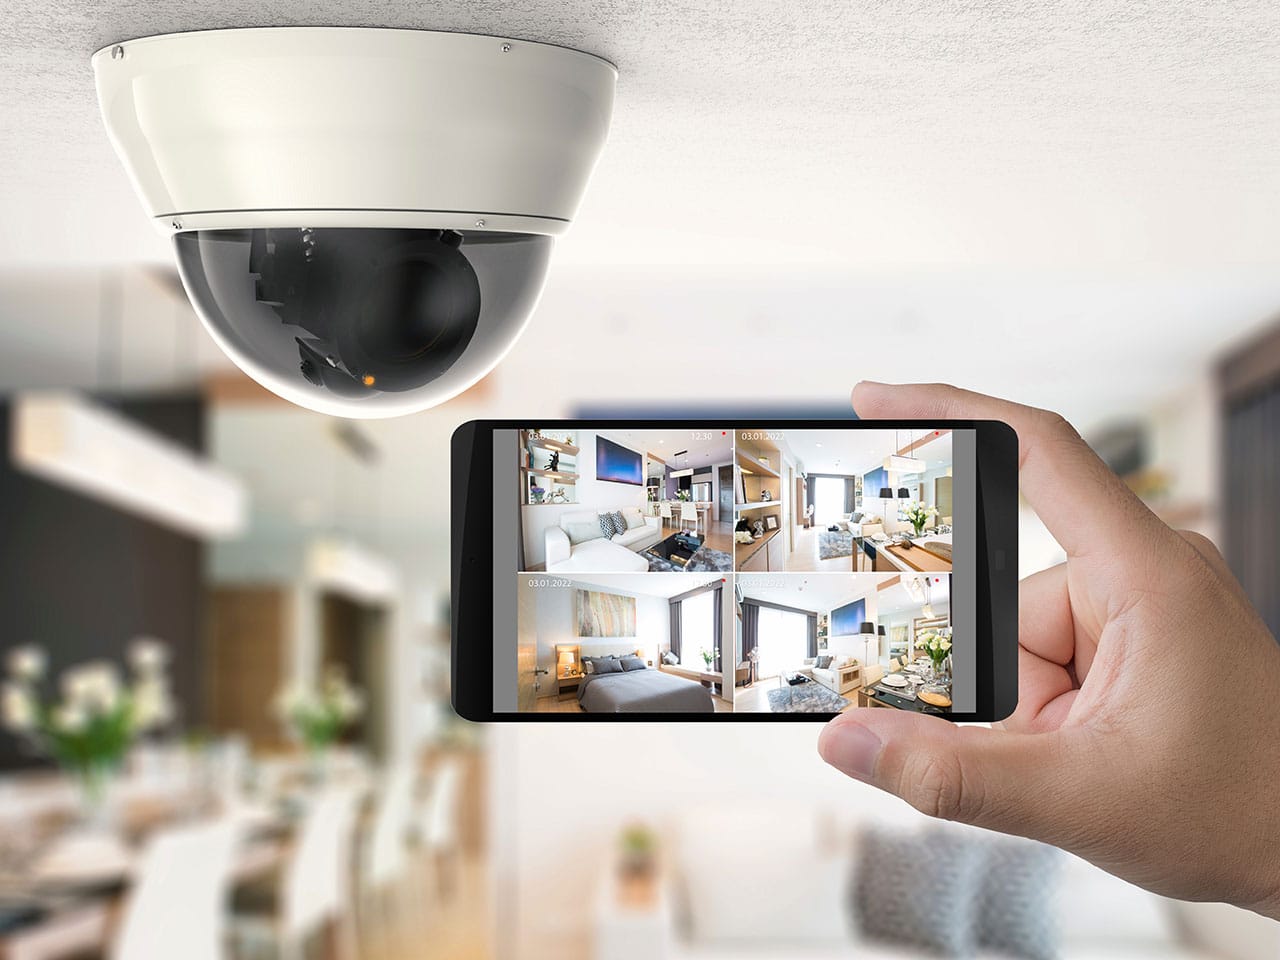 camera surveillance smartphone